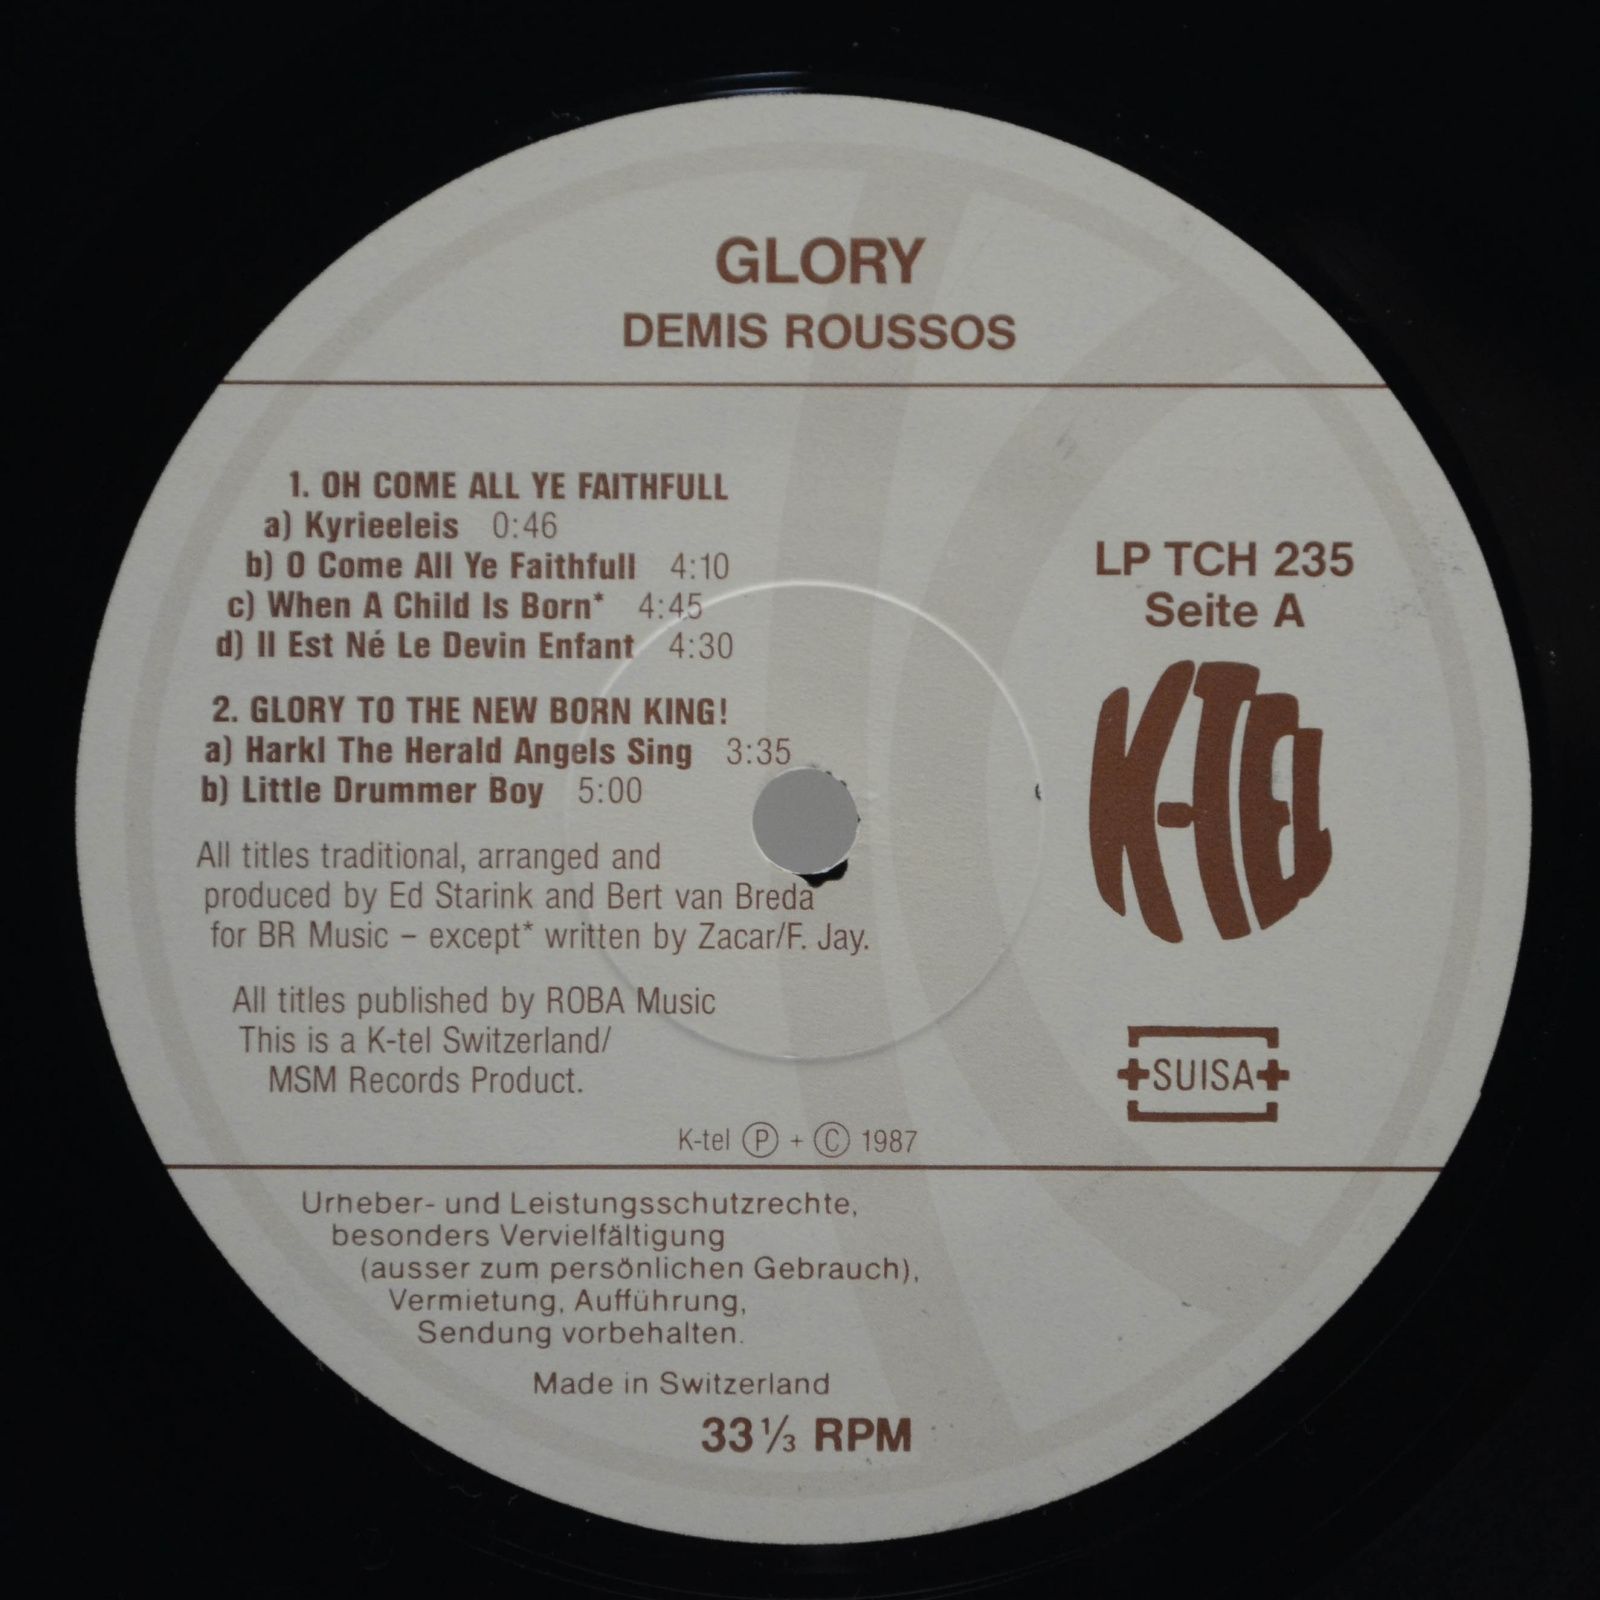 Demis Roussos — Glory - The Christmas Album, 1987